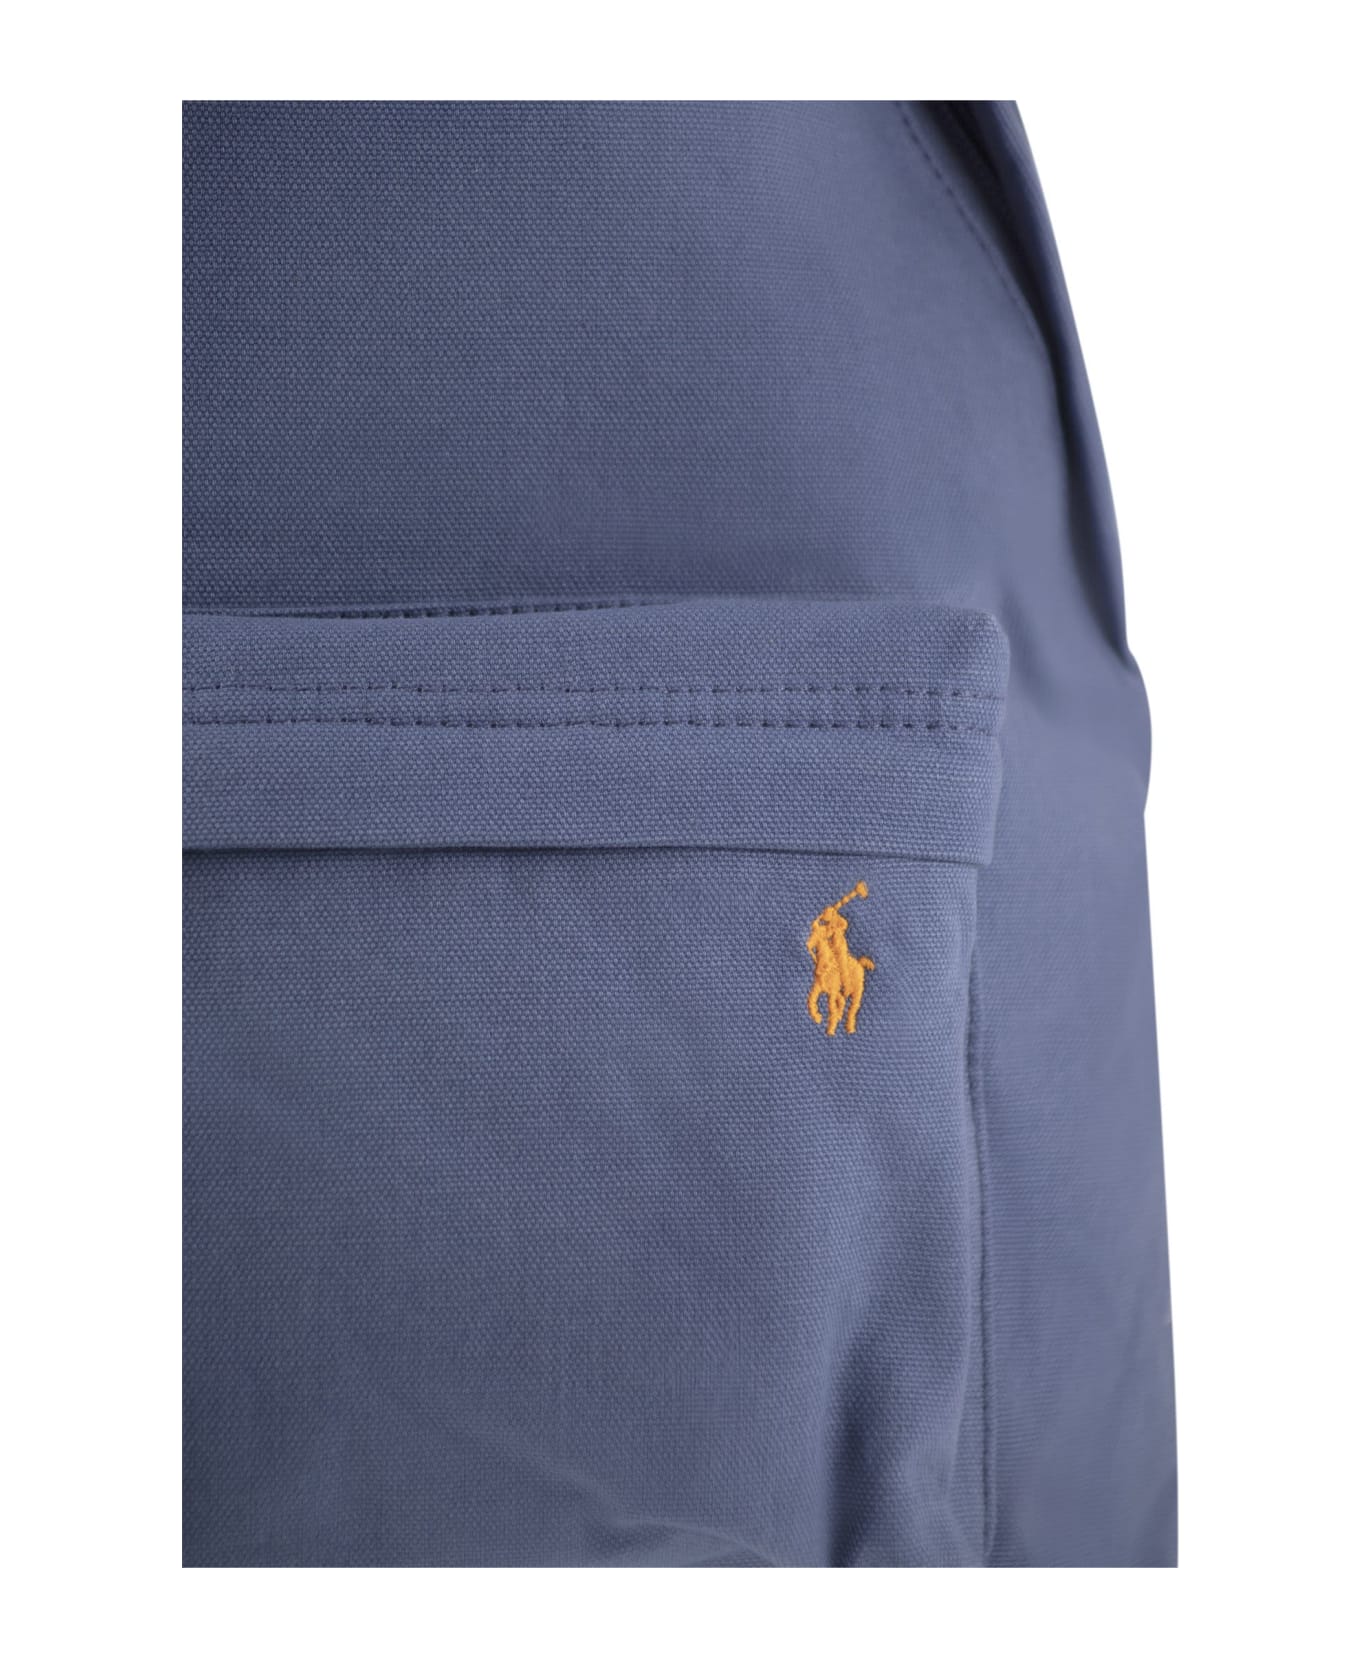 Polo Ralph Lauren Zaino Uomo Backpack - Light Blue